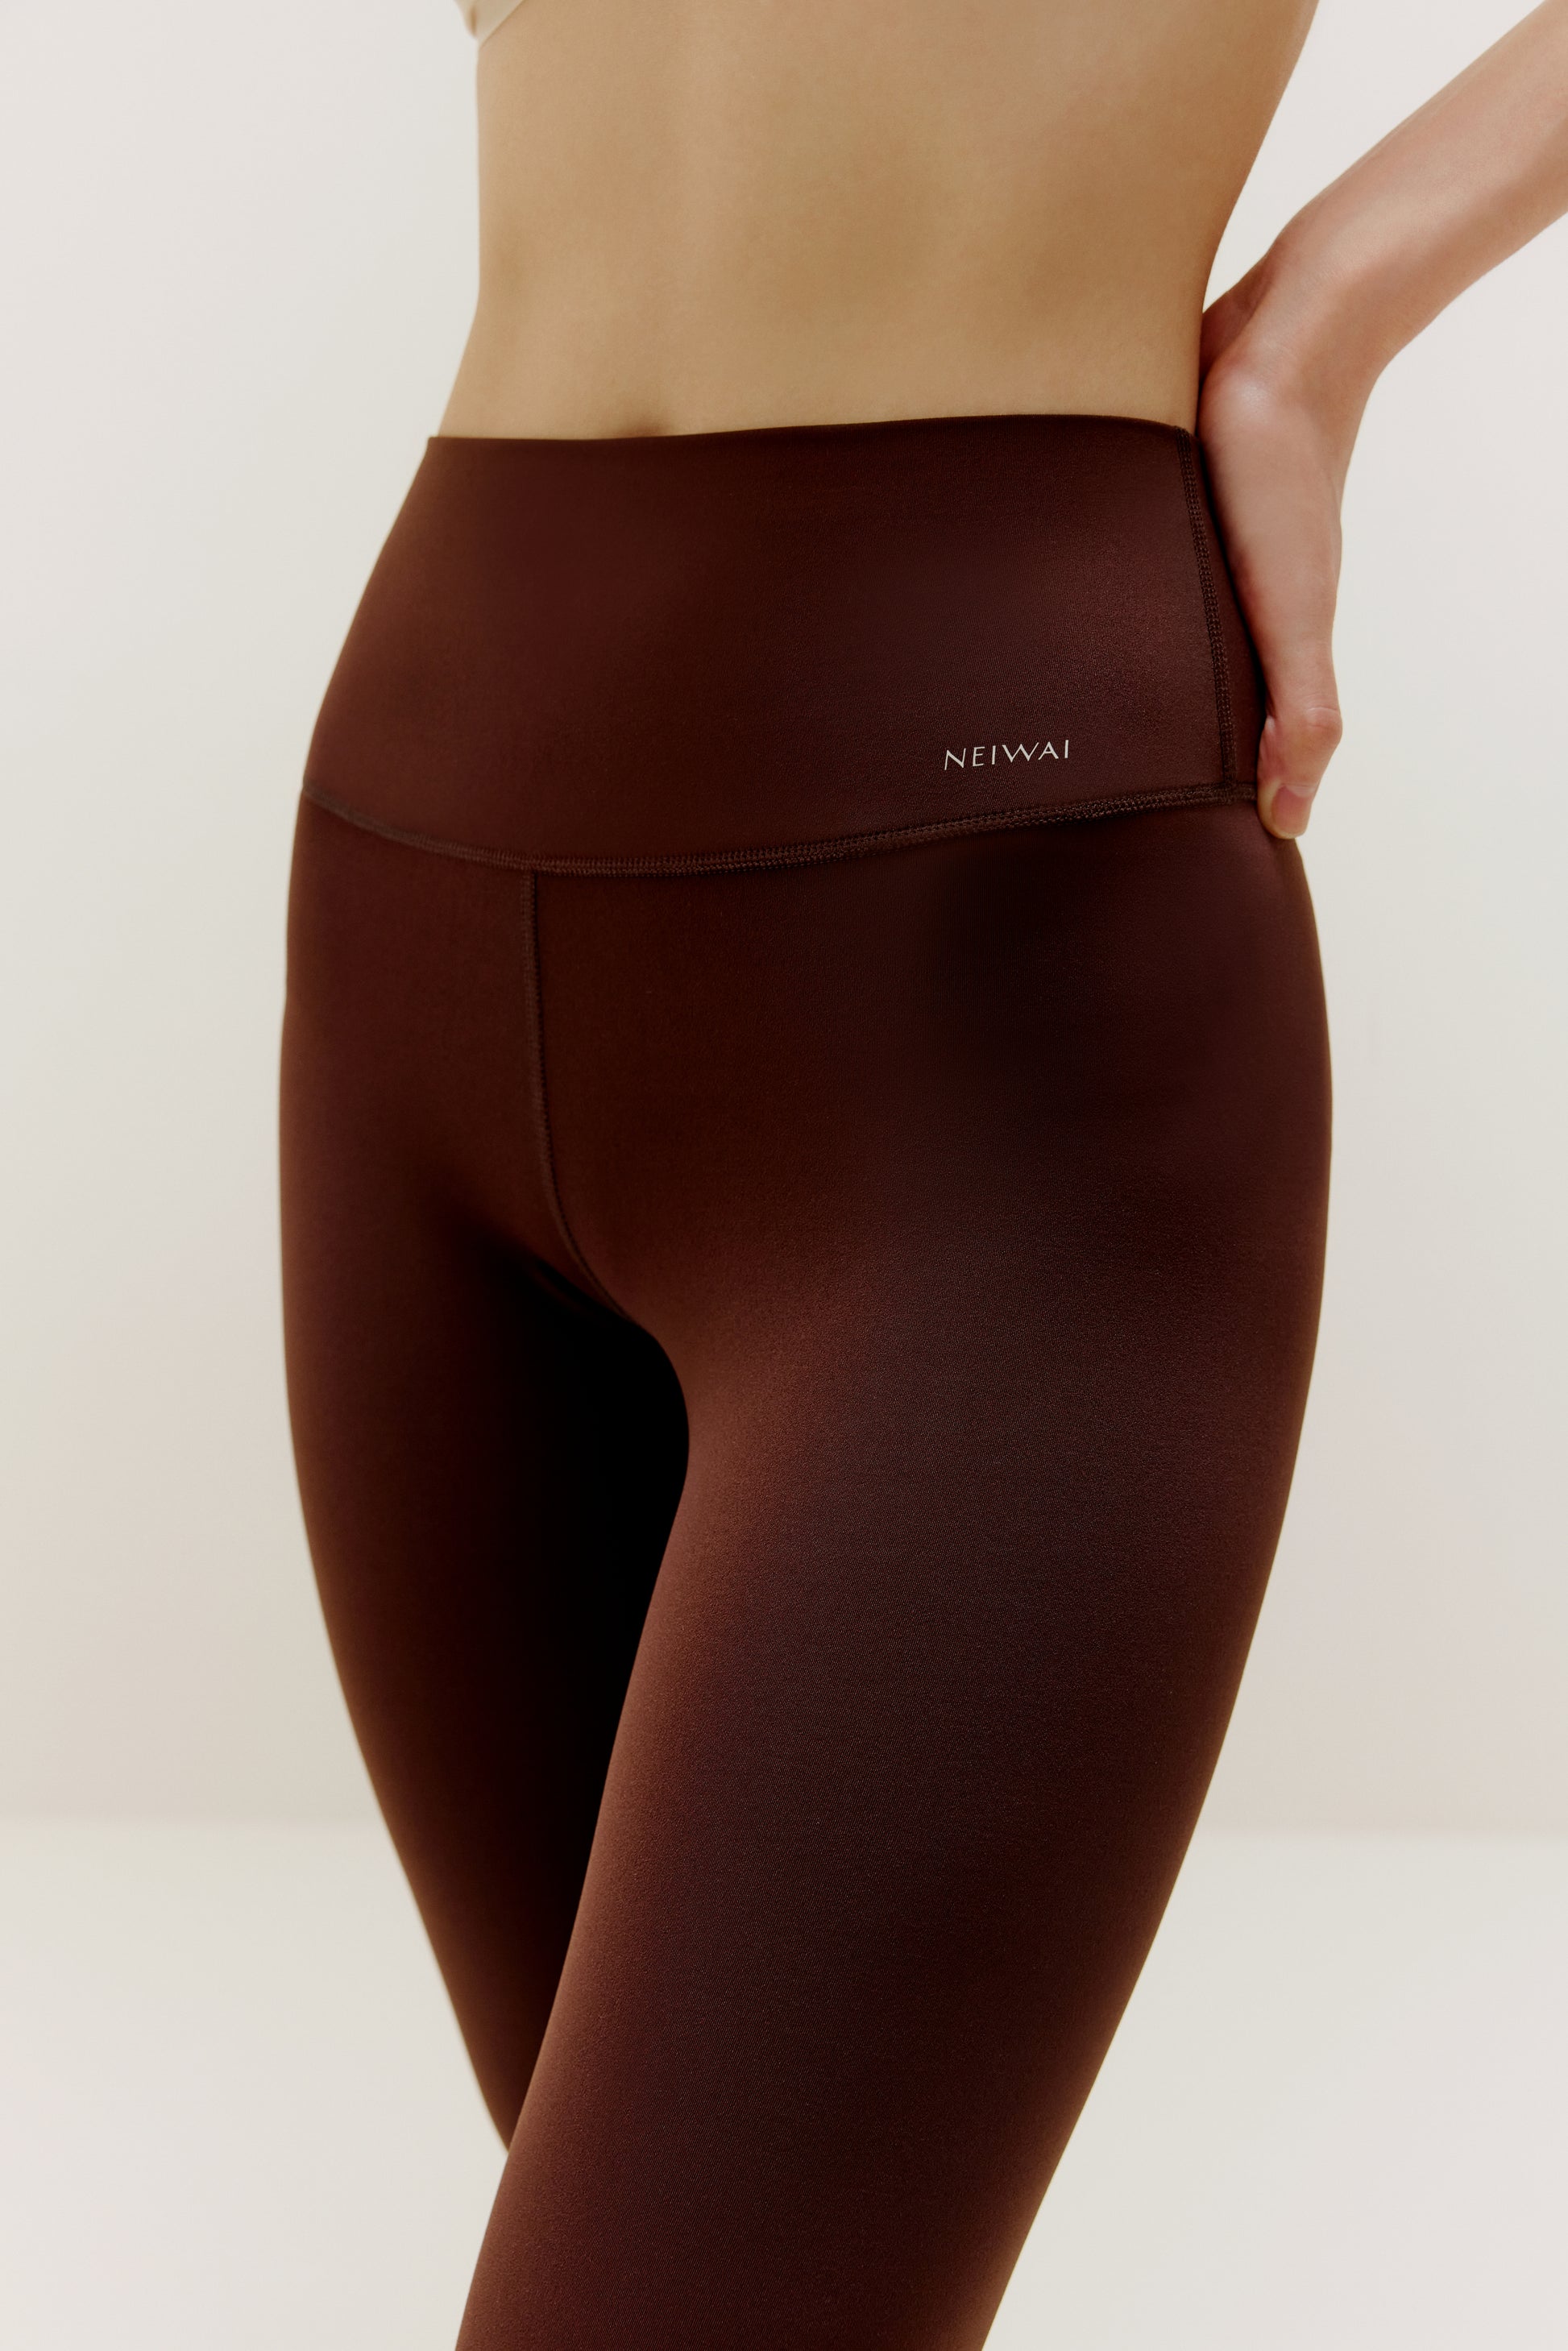 Close up waist band of woman wearing brown leggings